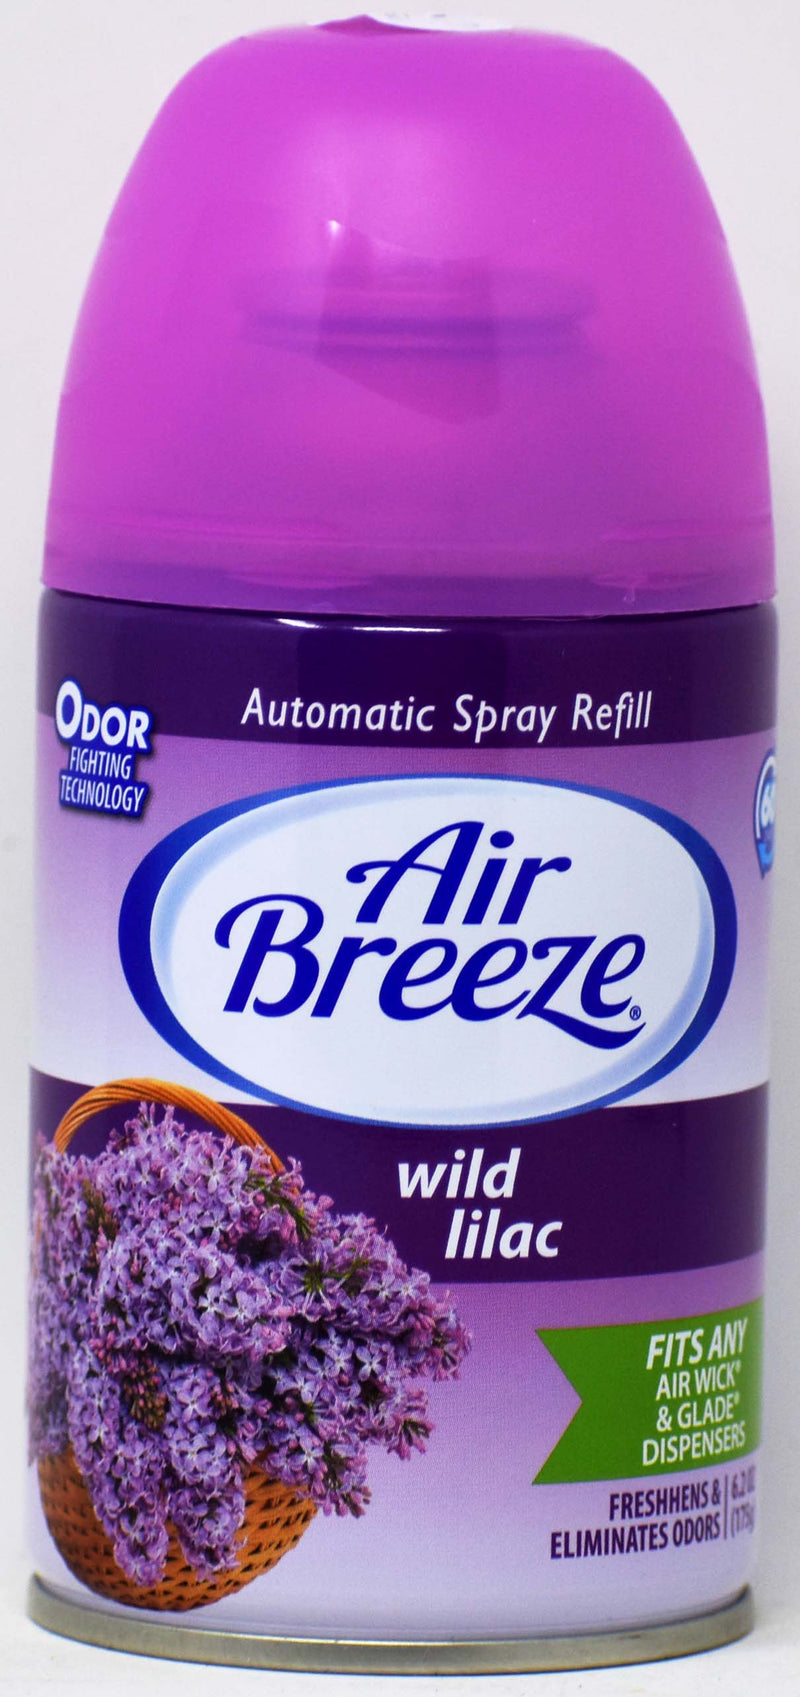 Glade/Air Wick Wild Lilac Automatic Spray Refill, 6.2 oz